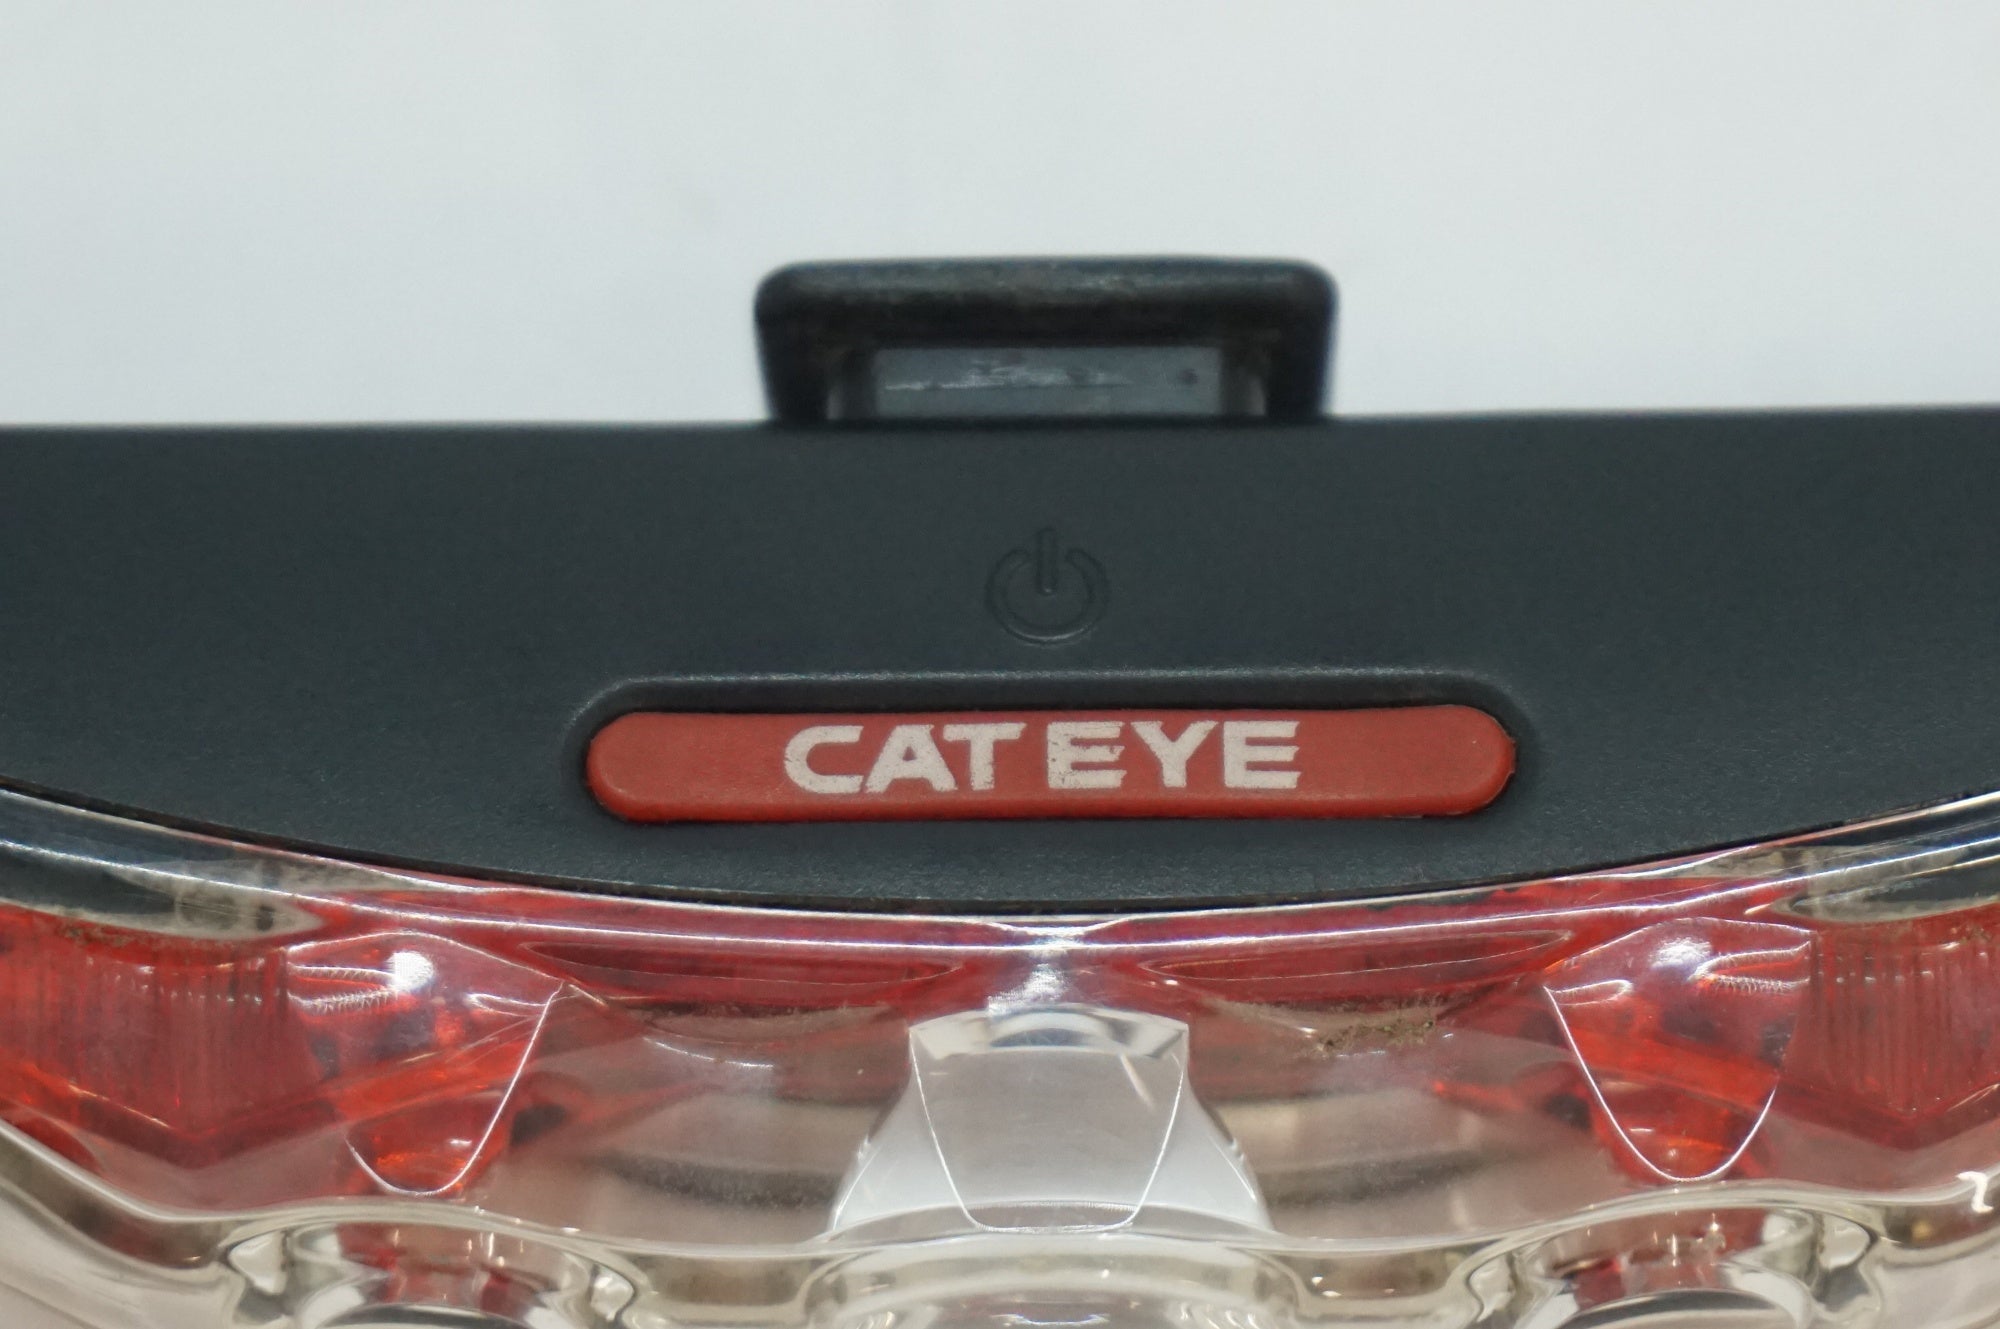 CATEYE 「キャットアイ」 TL-LD650 リアライト / 福岡アイランドシティ店